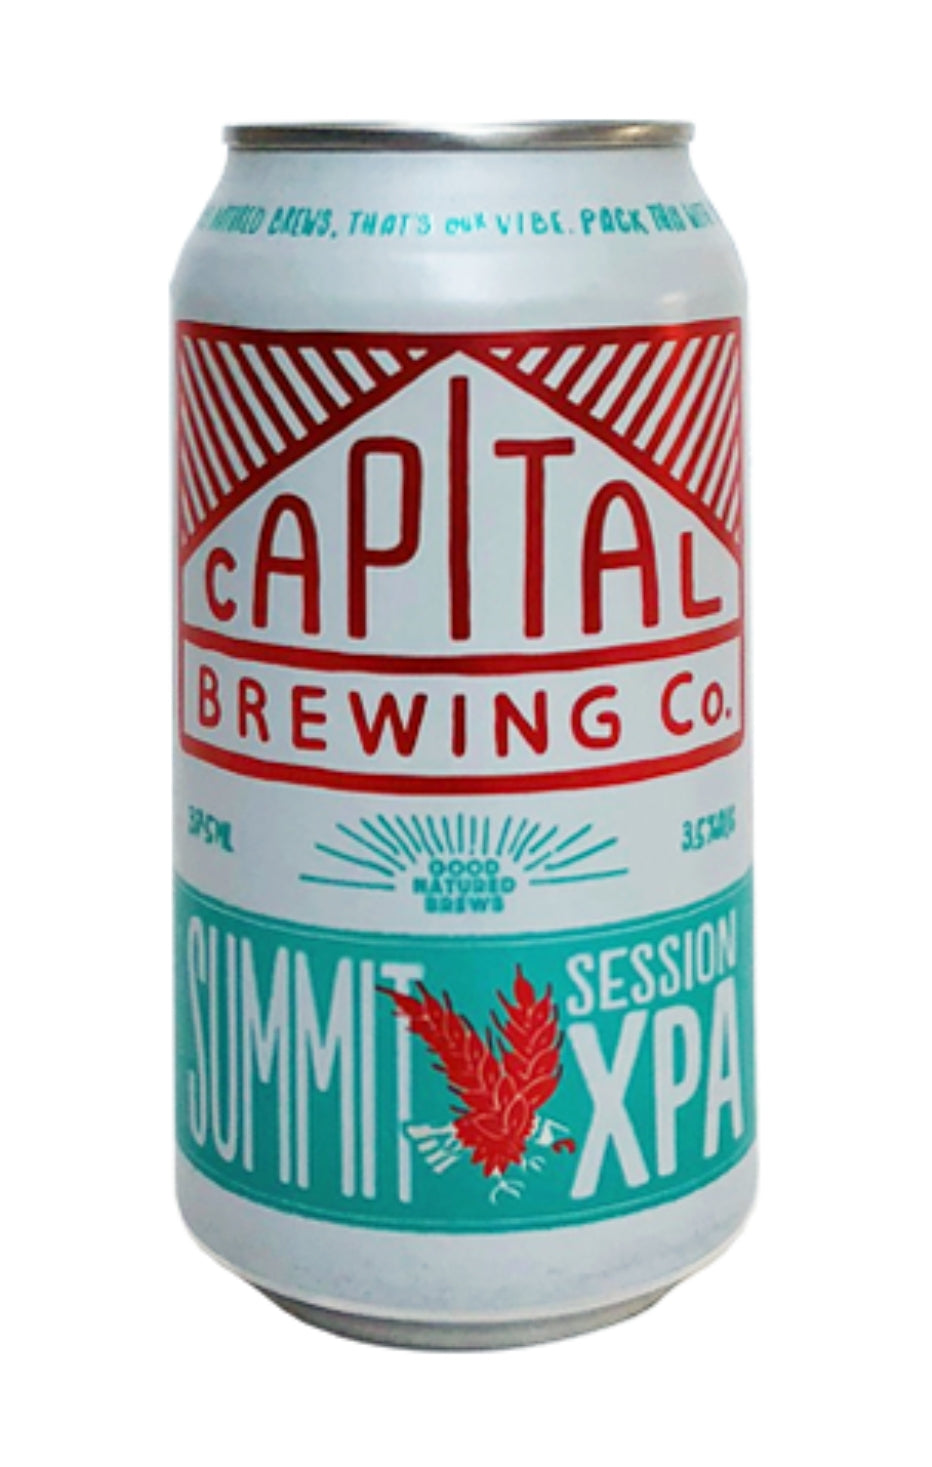 Capital Session Xpa